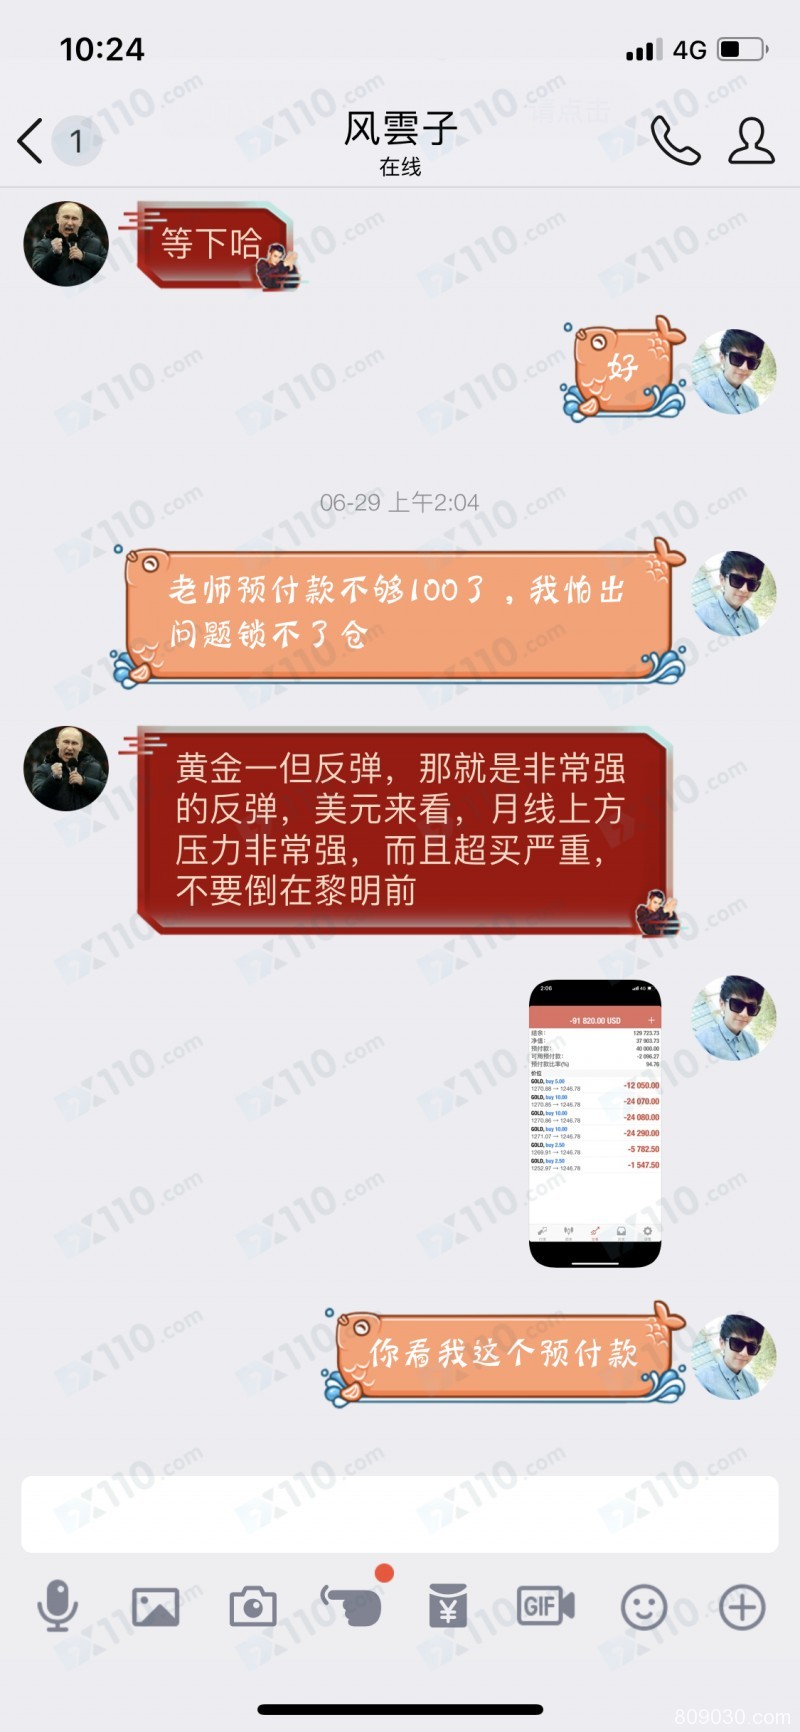 QQ老师诱骗投资者进香港国泰金业平台交易，喊单跟单亏损严重